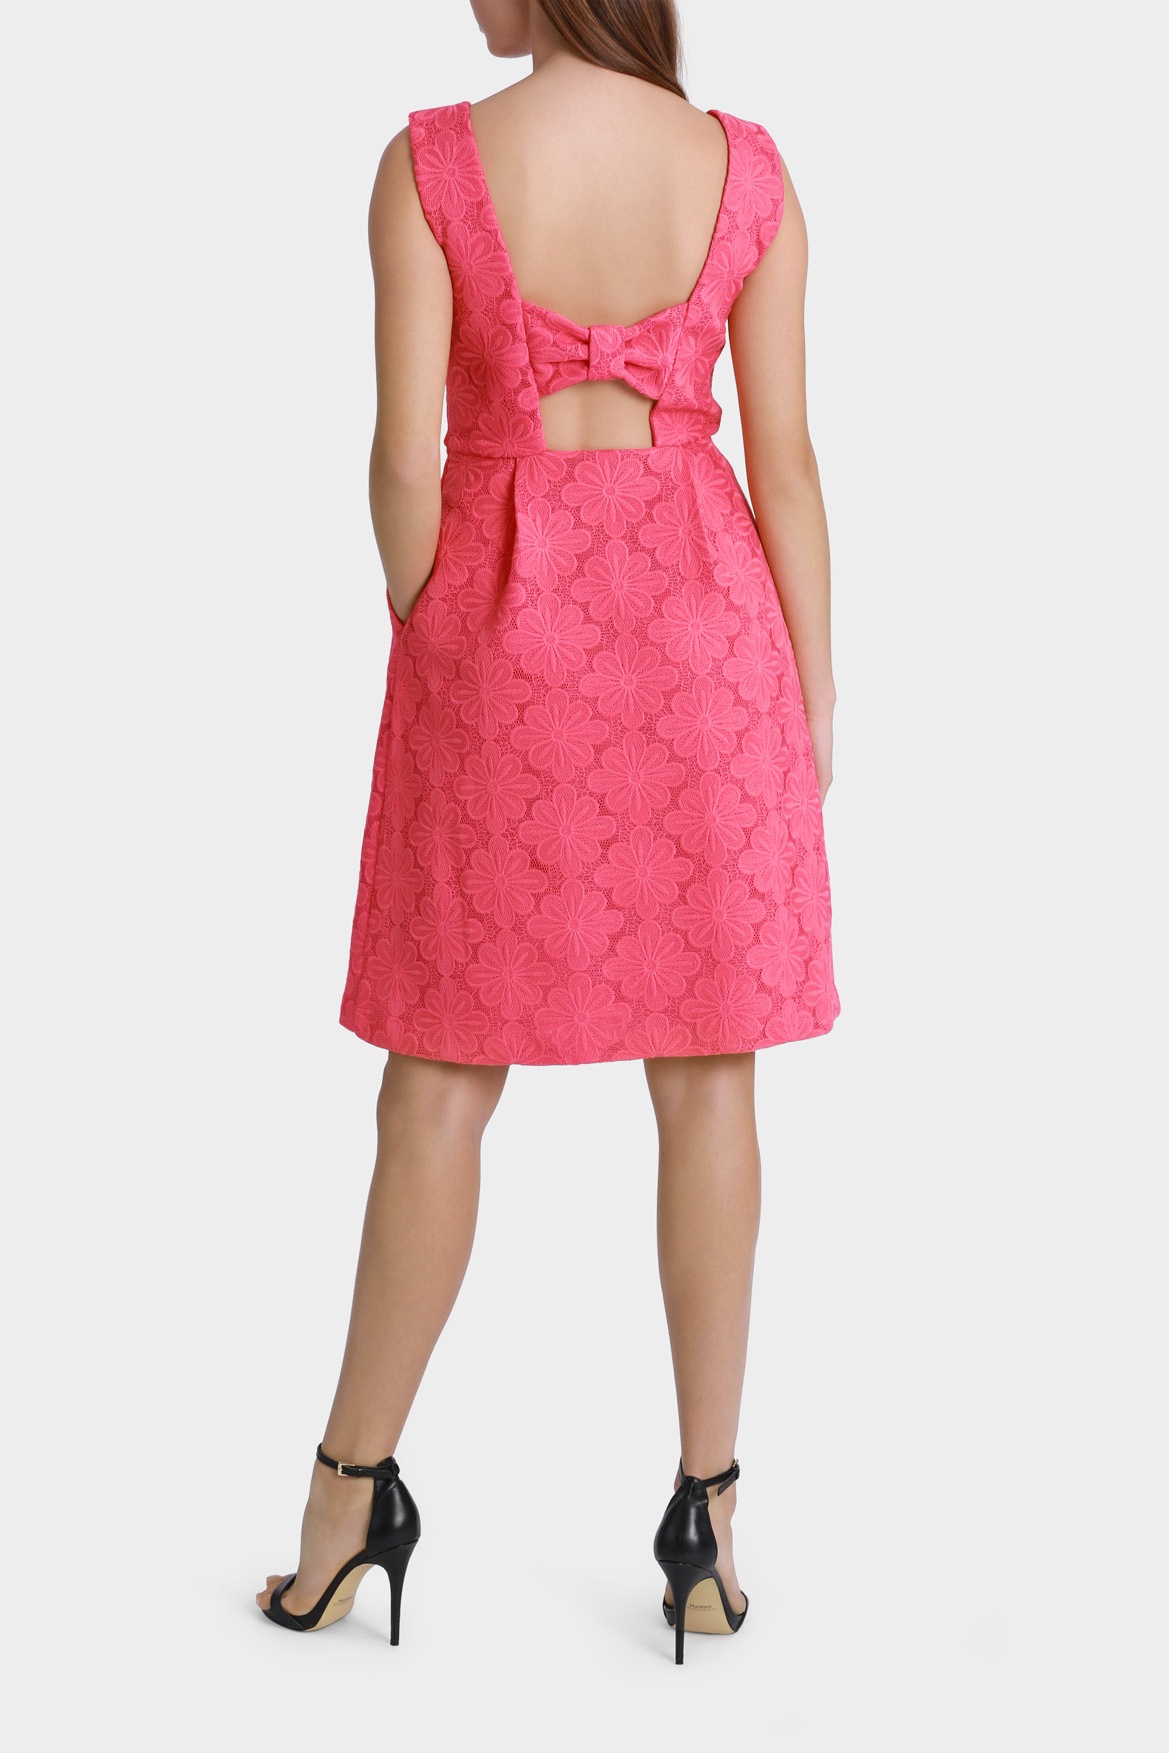 Hi There From Karen Walker | Strawberry Texture Midi Dress | Myer Online